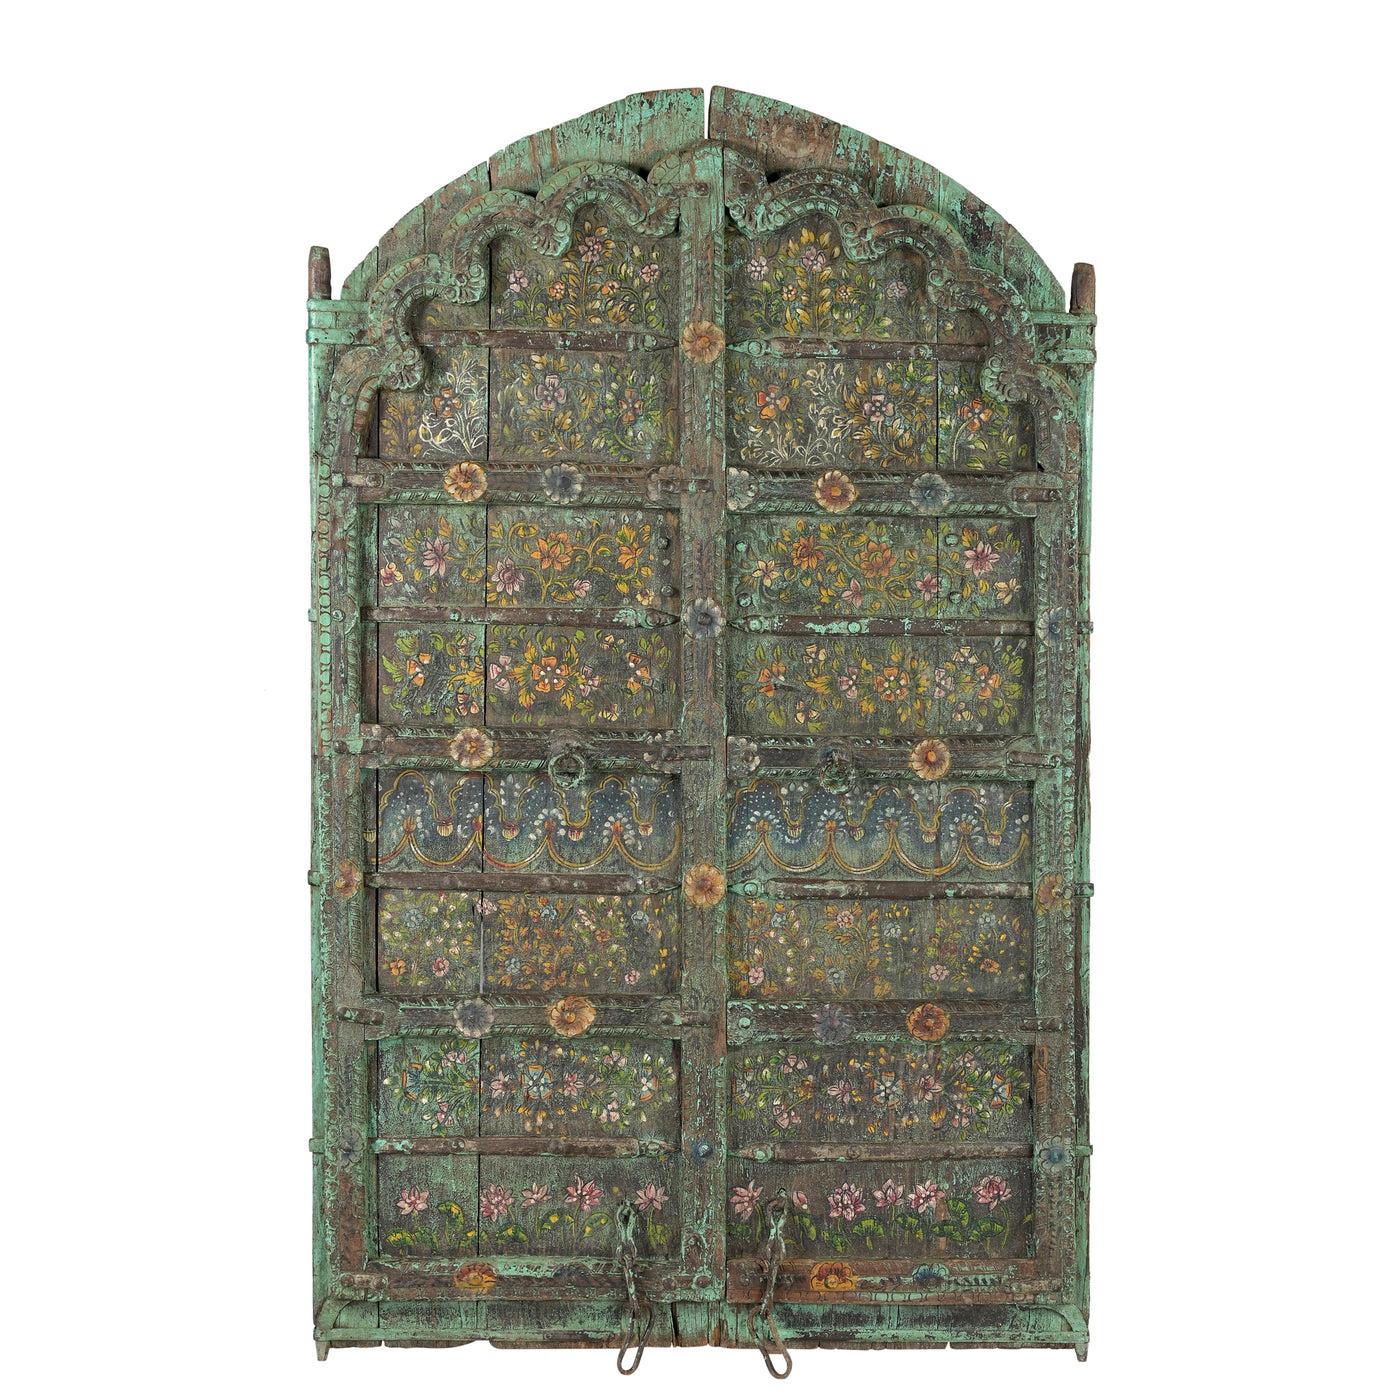 Mhurdiya - Porte indienne ancienne peinte n°3